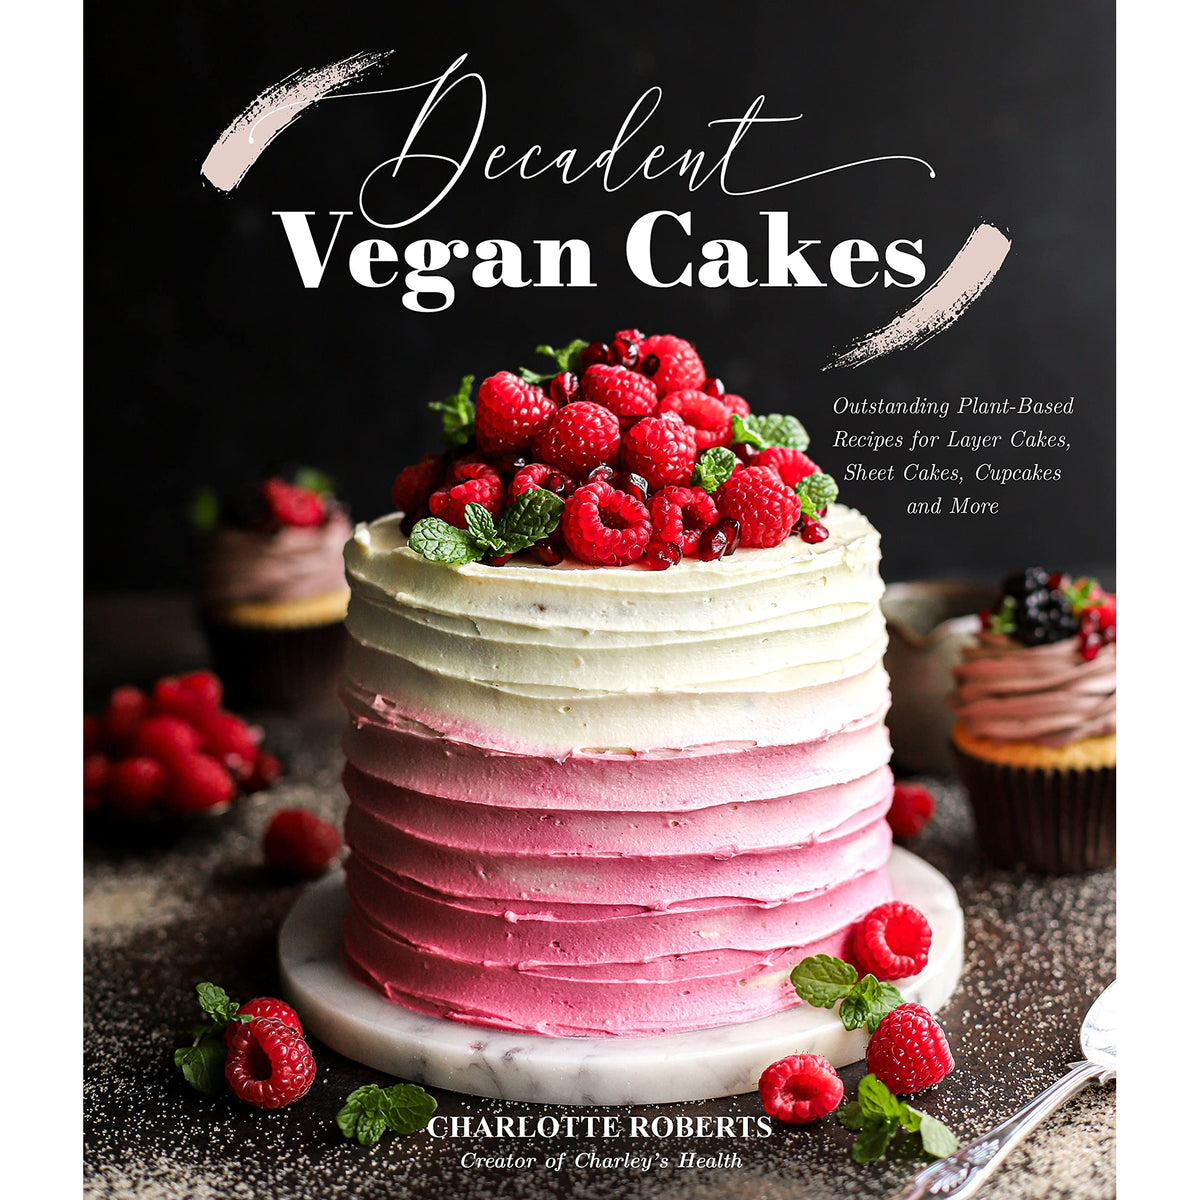 Decadent Vegan Cakes